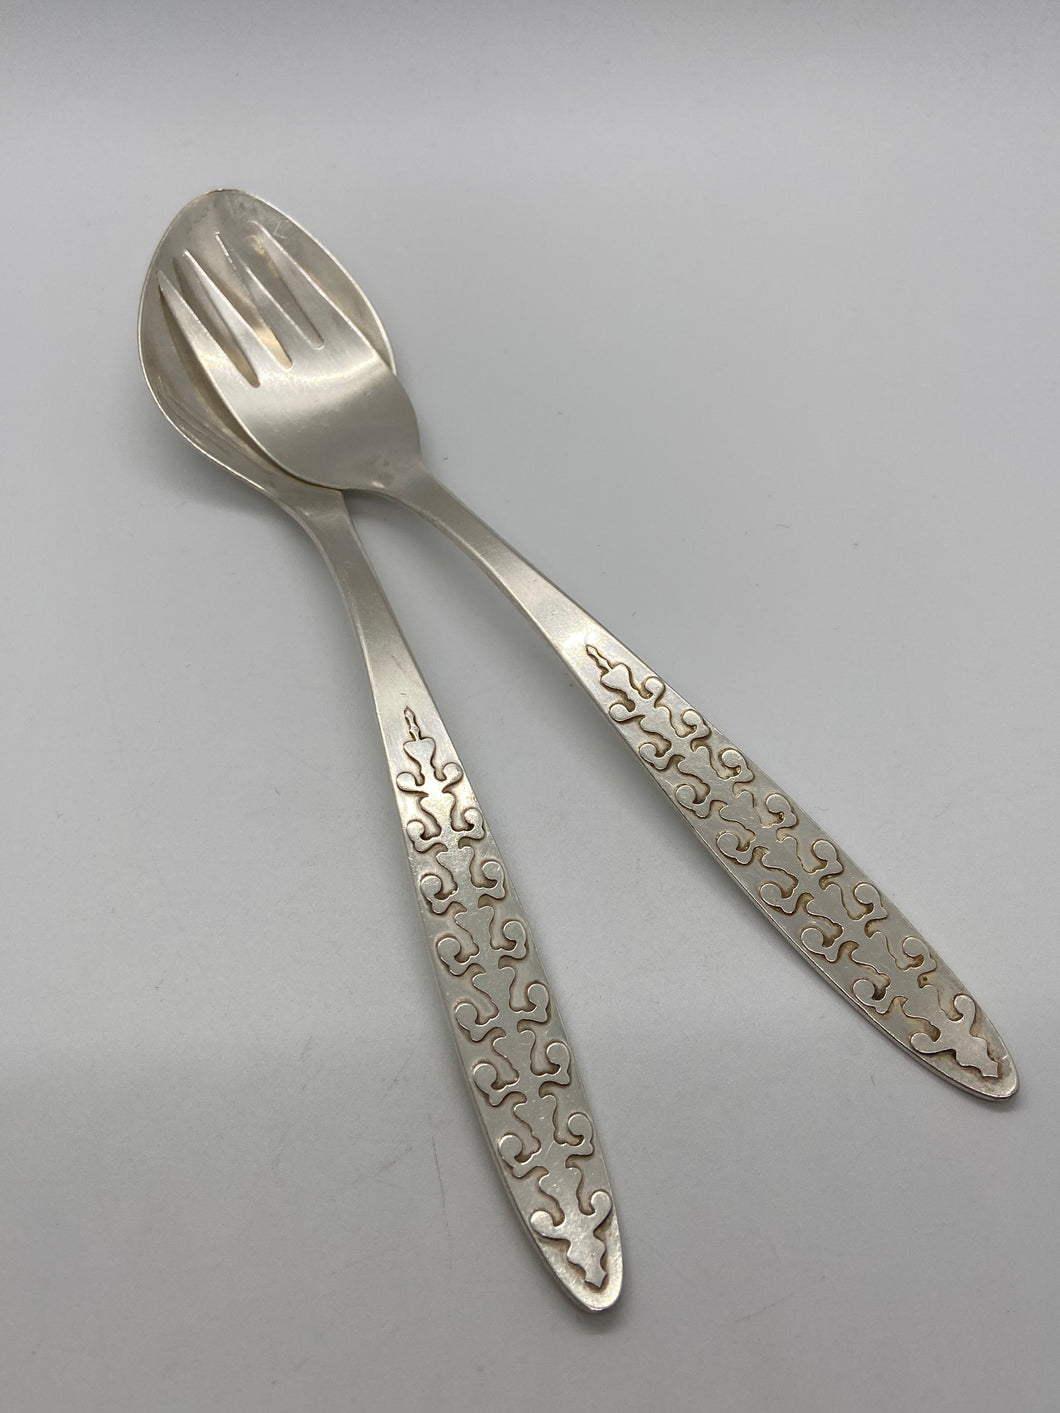 Vintage 916 Russian Silver Spoon & Fork Set